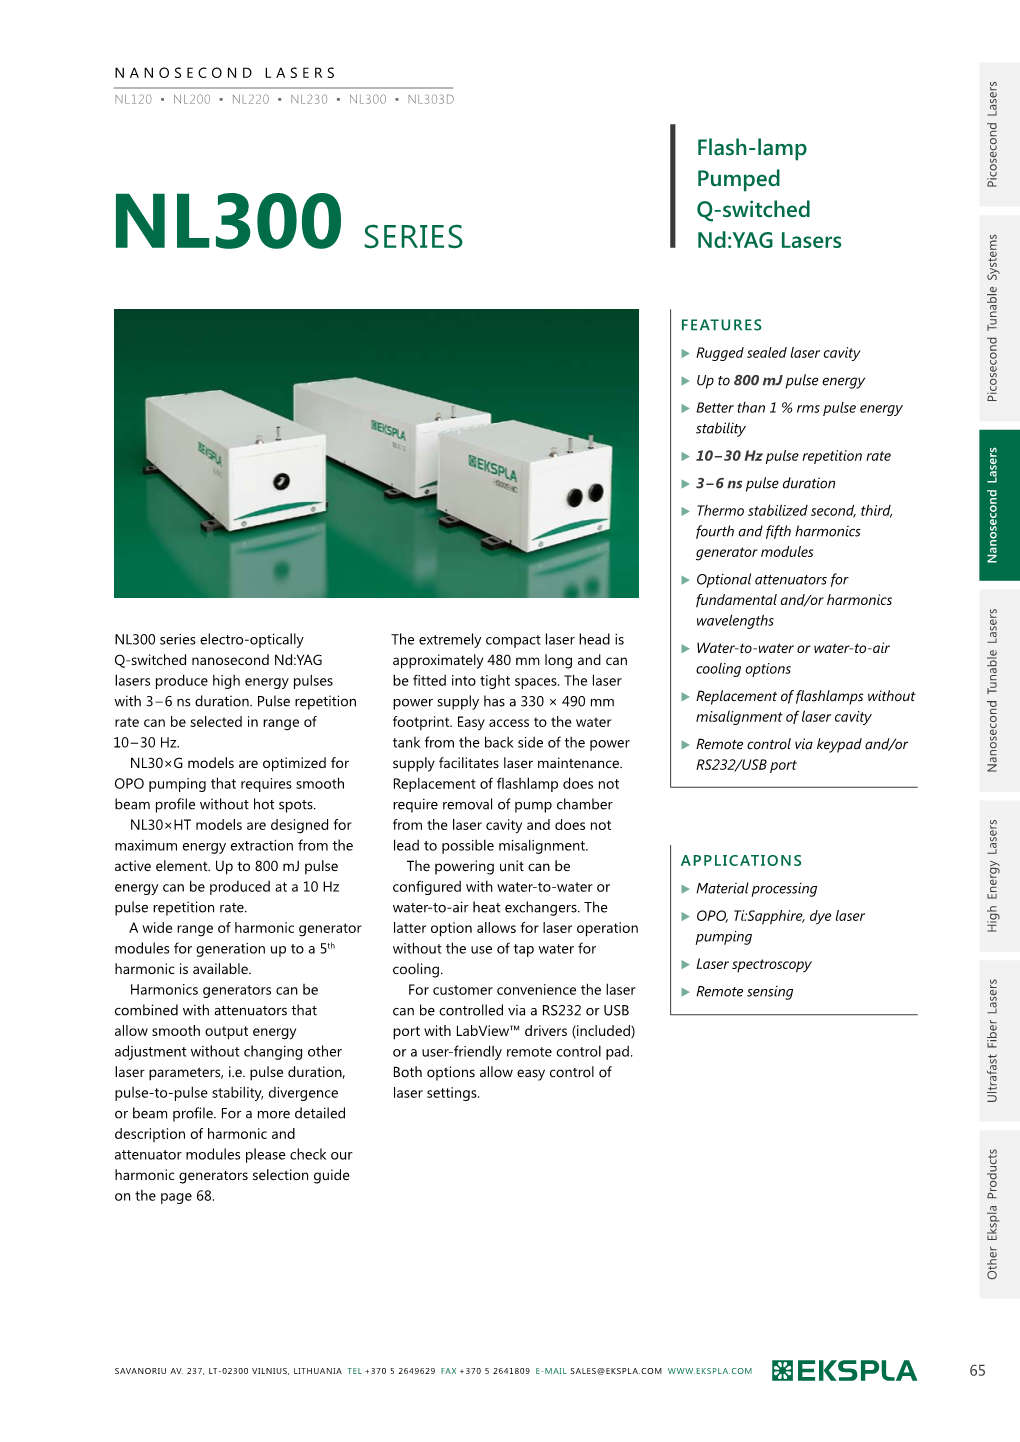 NL300 Serieselectro-Optically Nanosec Energy Canbeproduced Ata10hz on Thepage 68